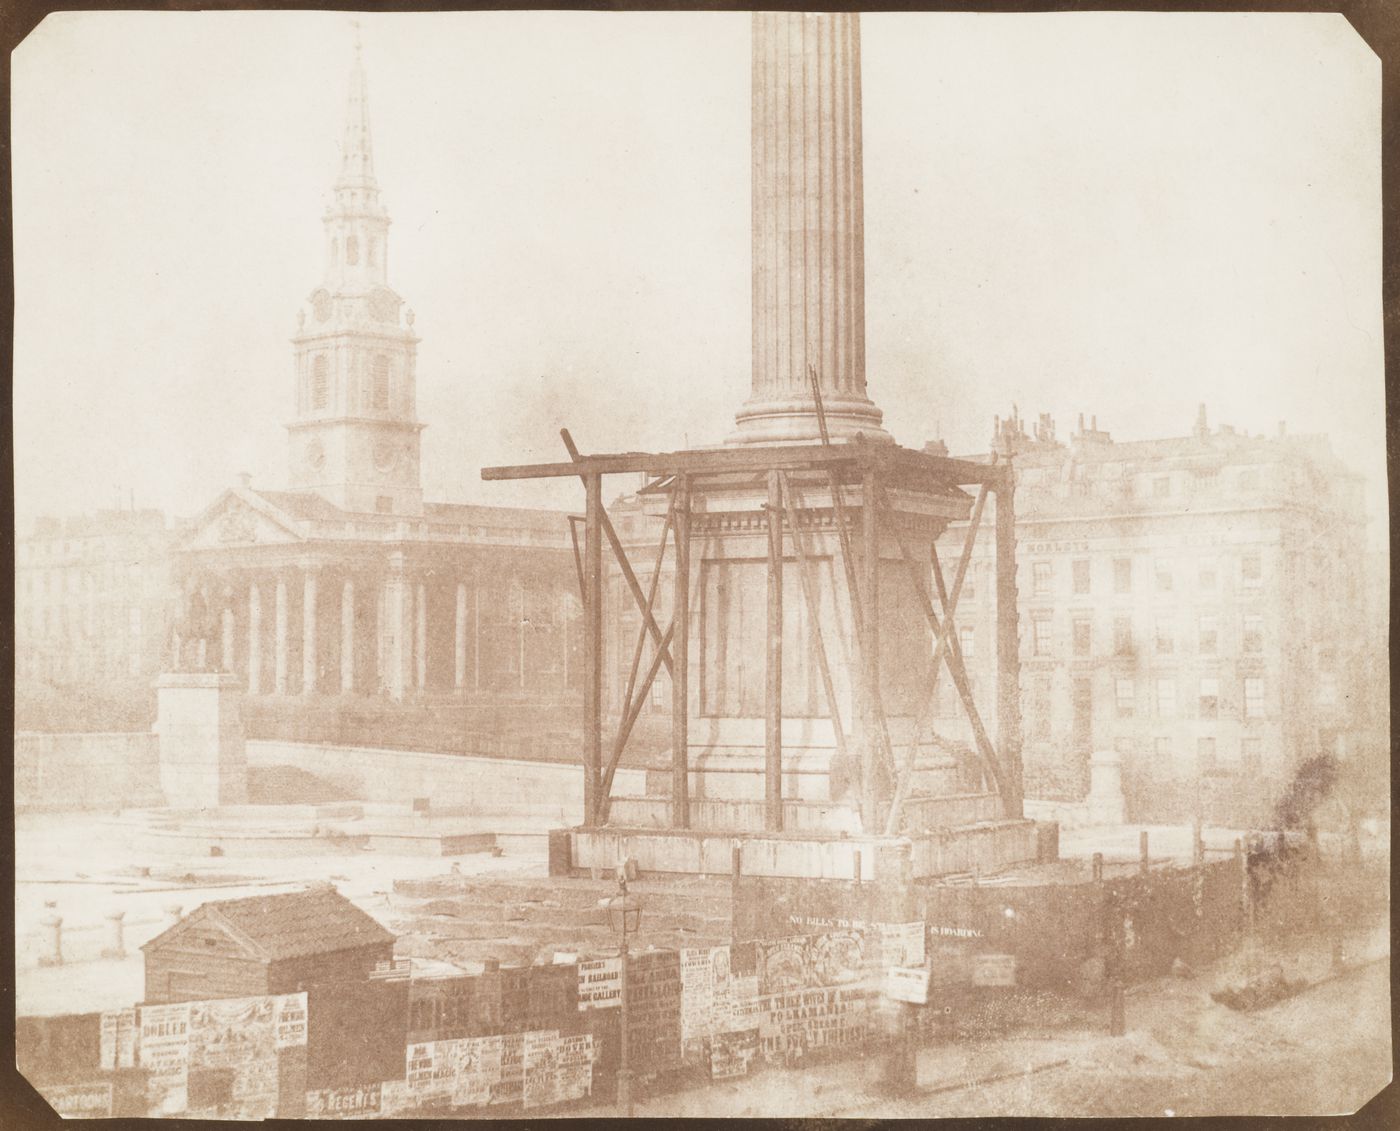 Nelson's Column under construction, Trafalgar Square, London, England